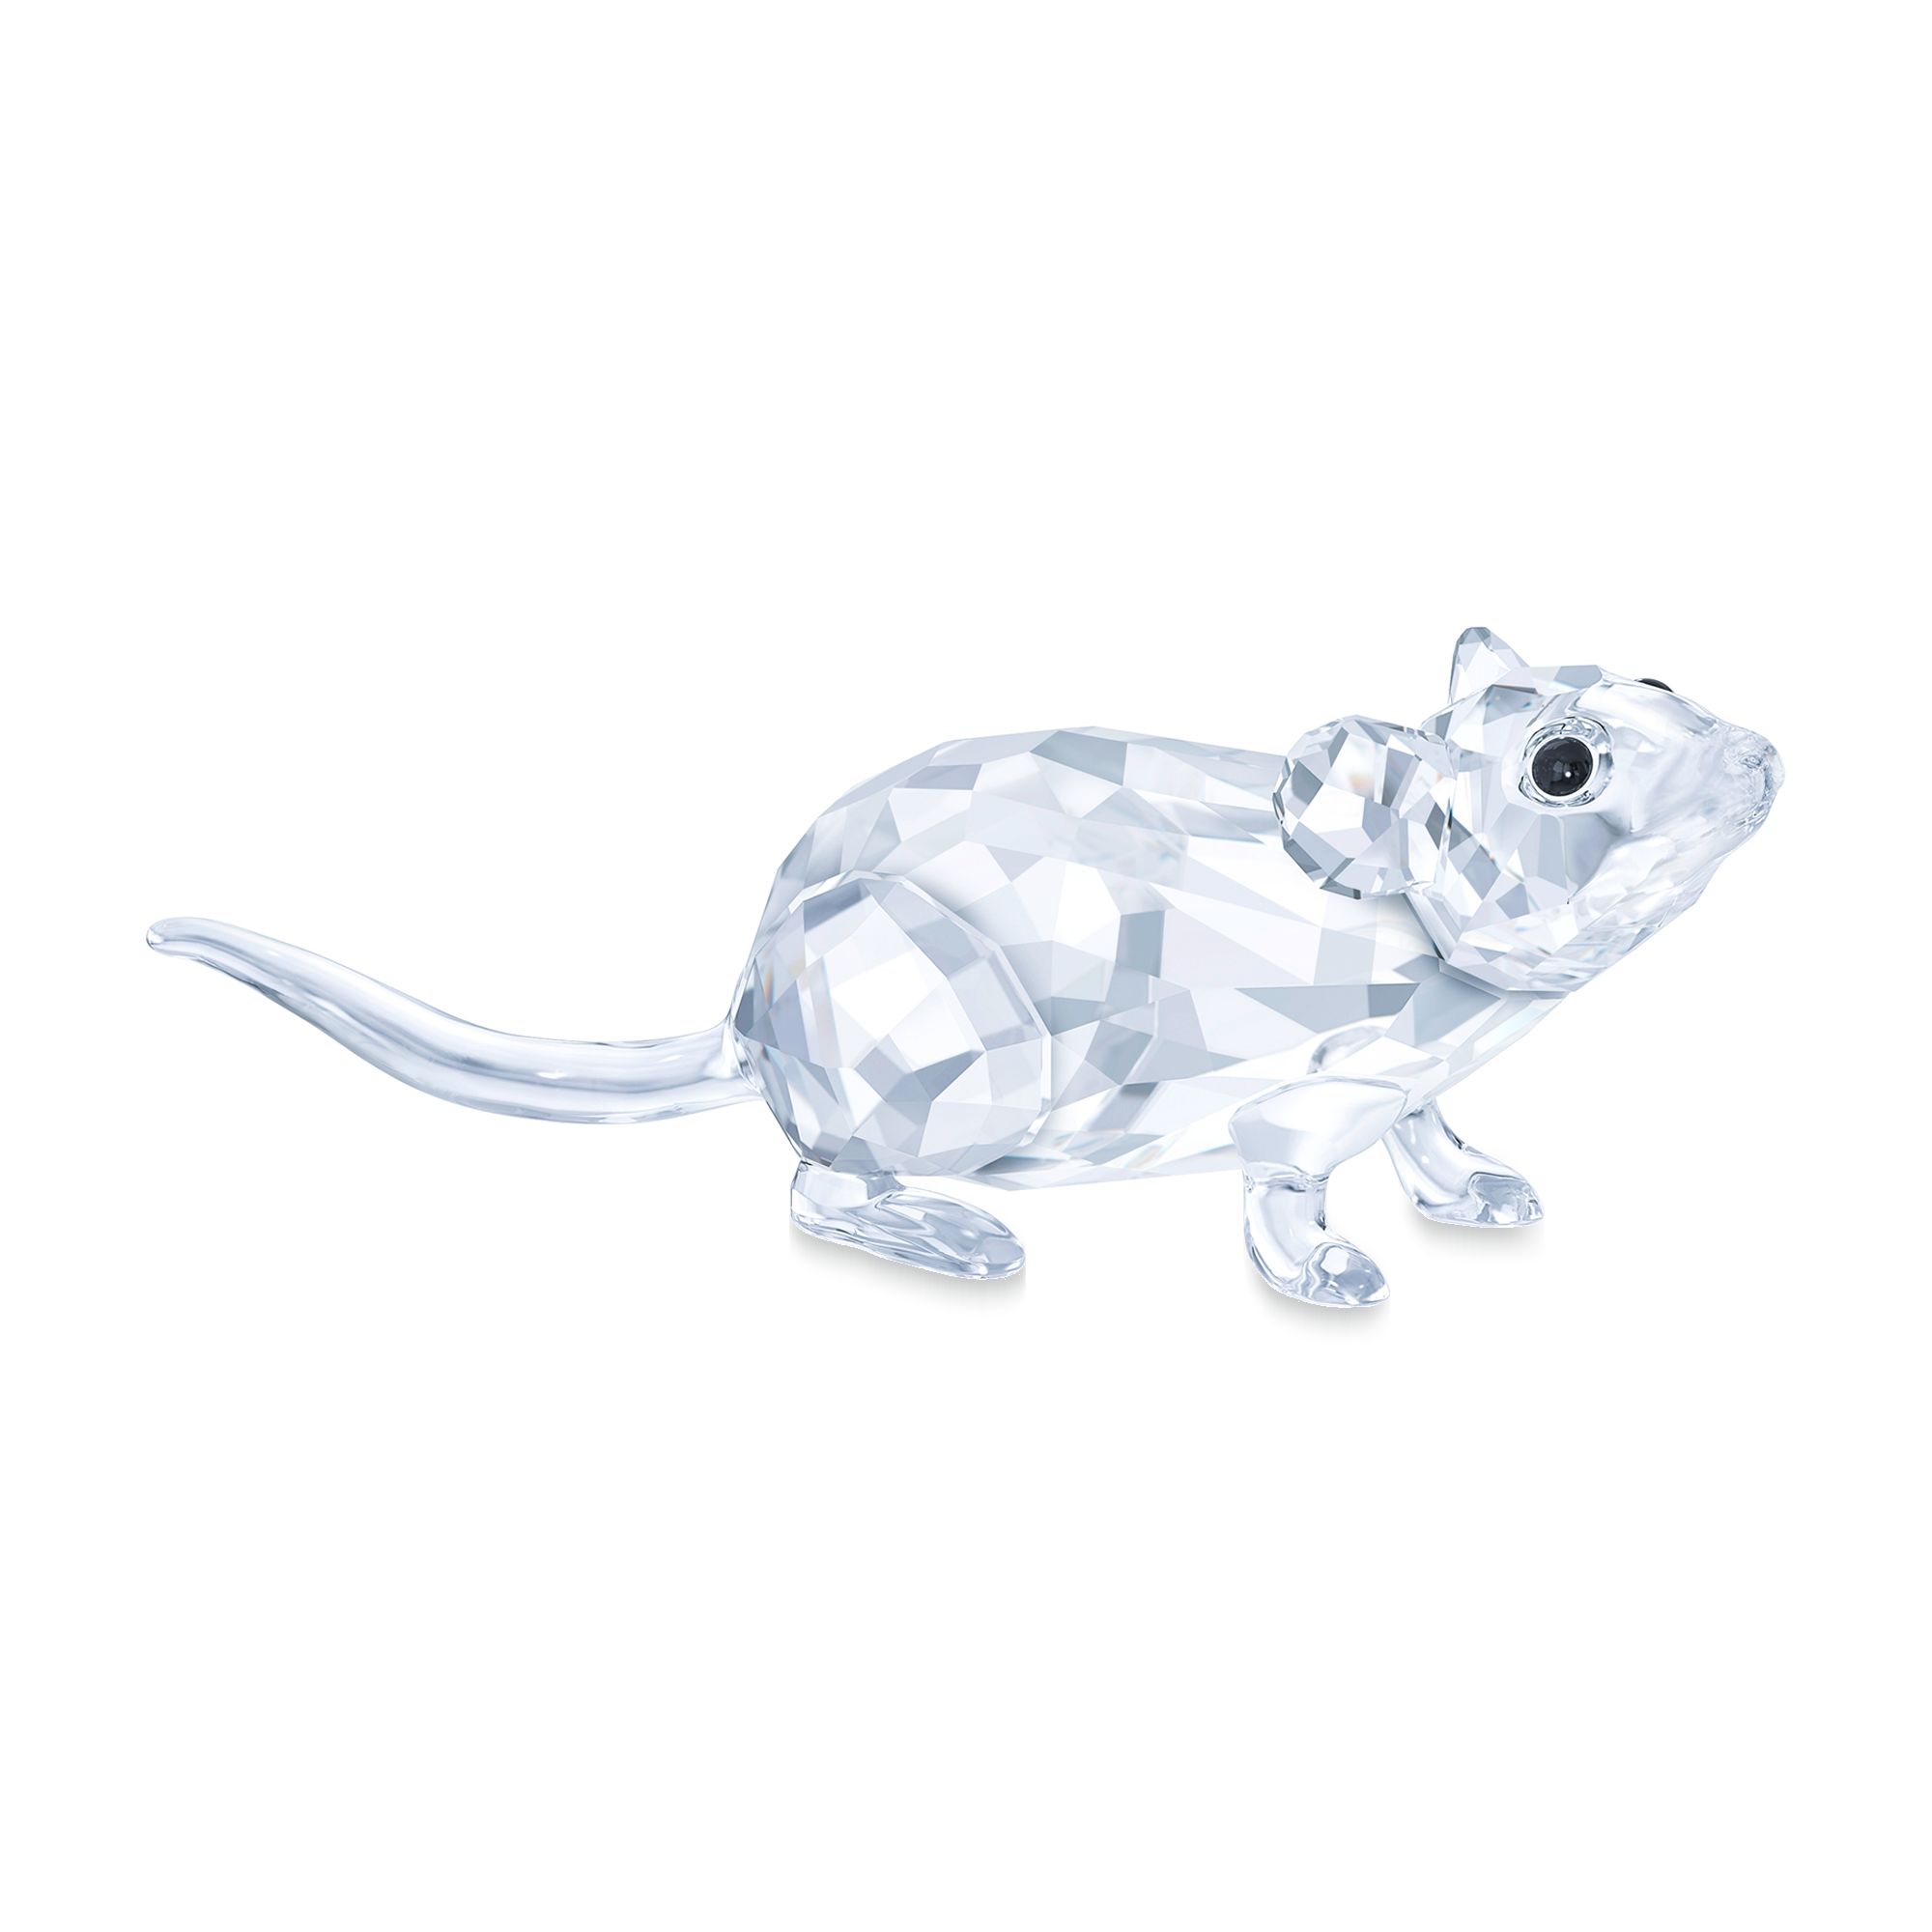 Swarovski "Mouse" Figurine | Ross-Simons